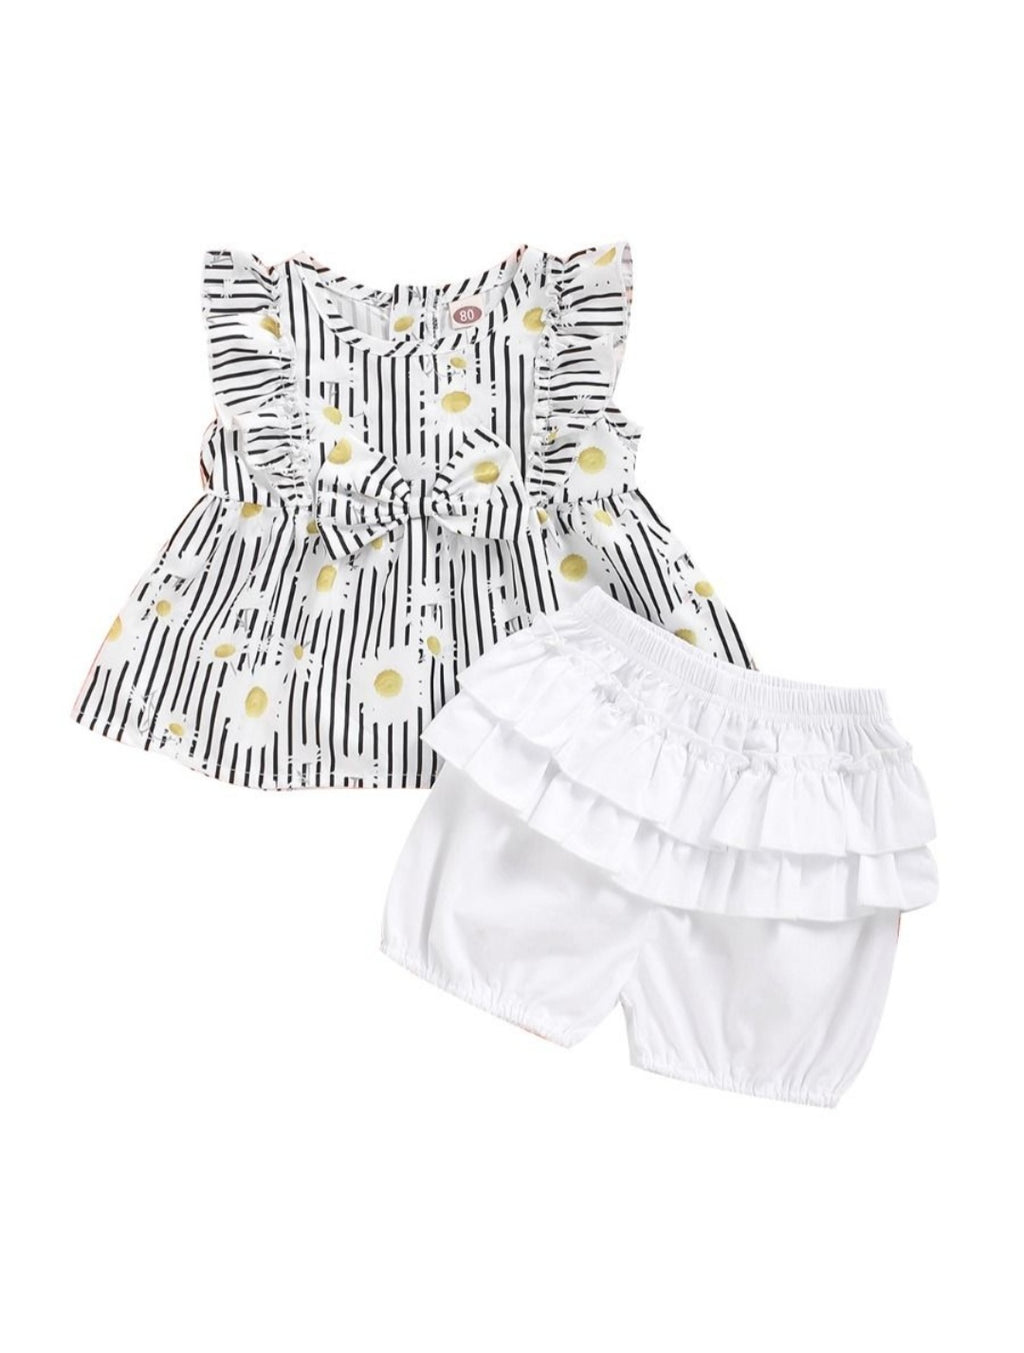 Daisy print top &  shorts set